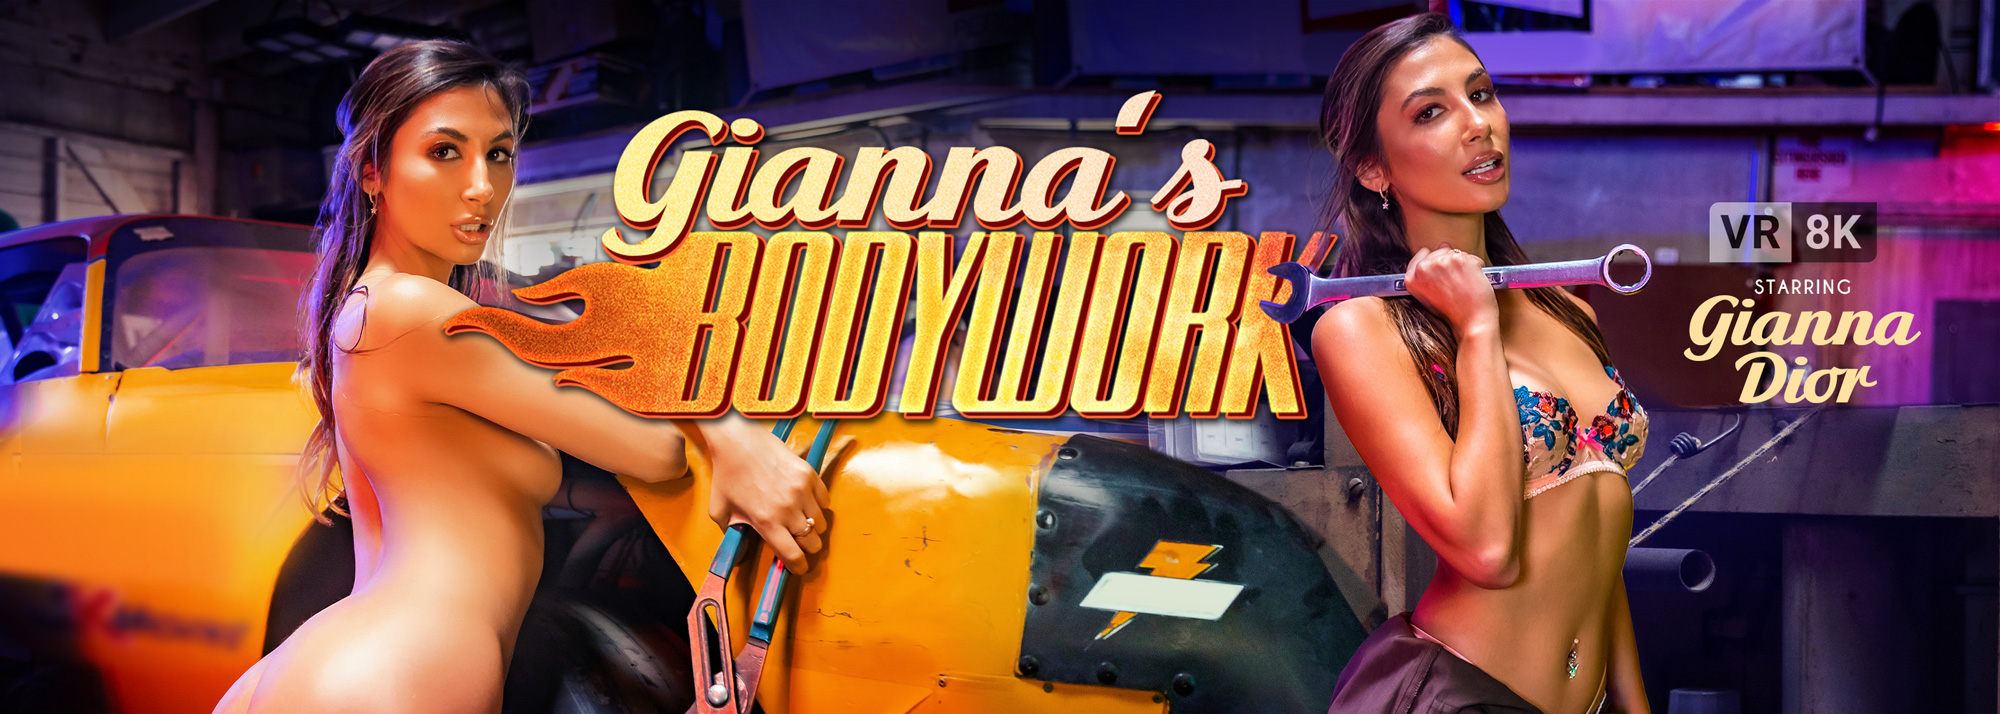 Gianna's Bodywork - VR Porn Video, Starring: Gianna Dior